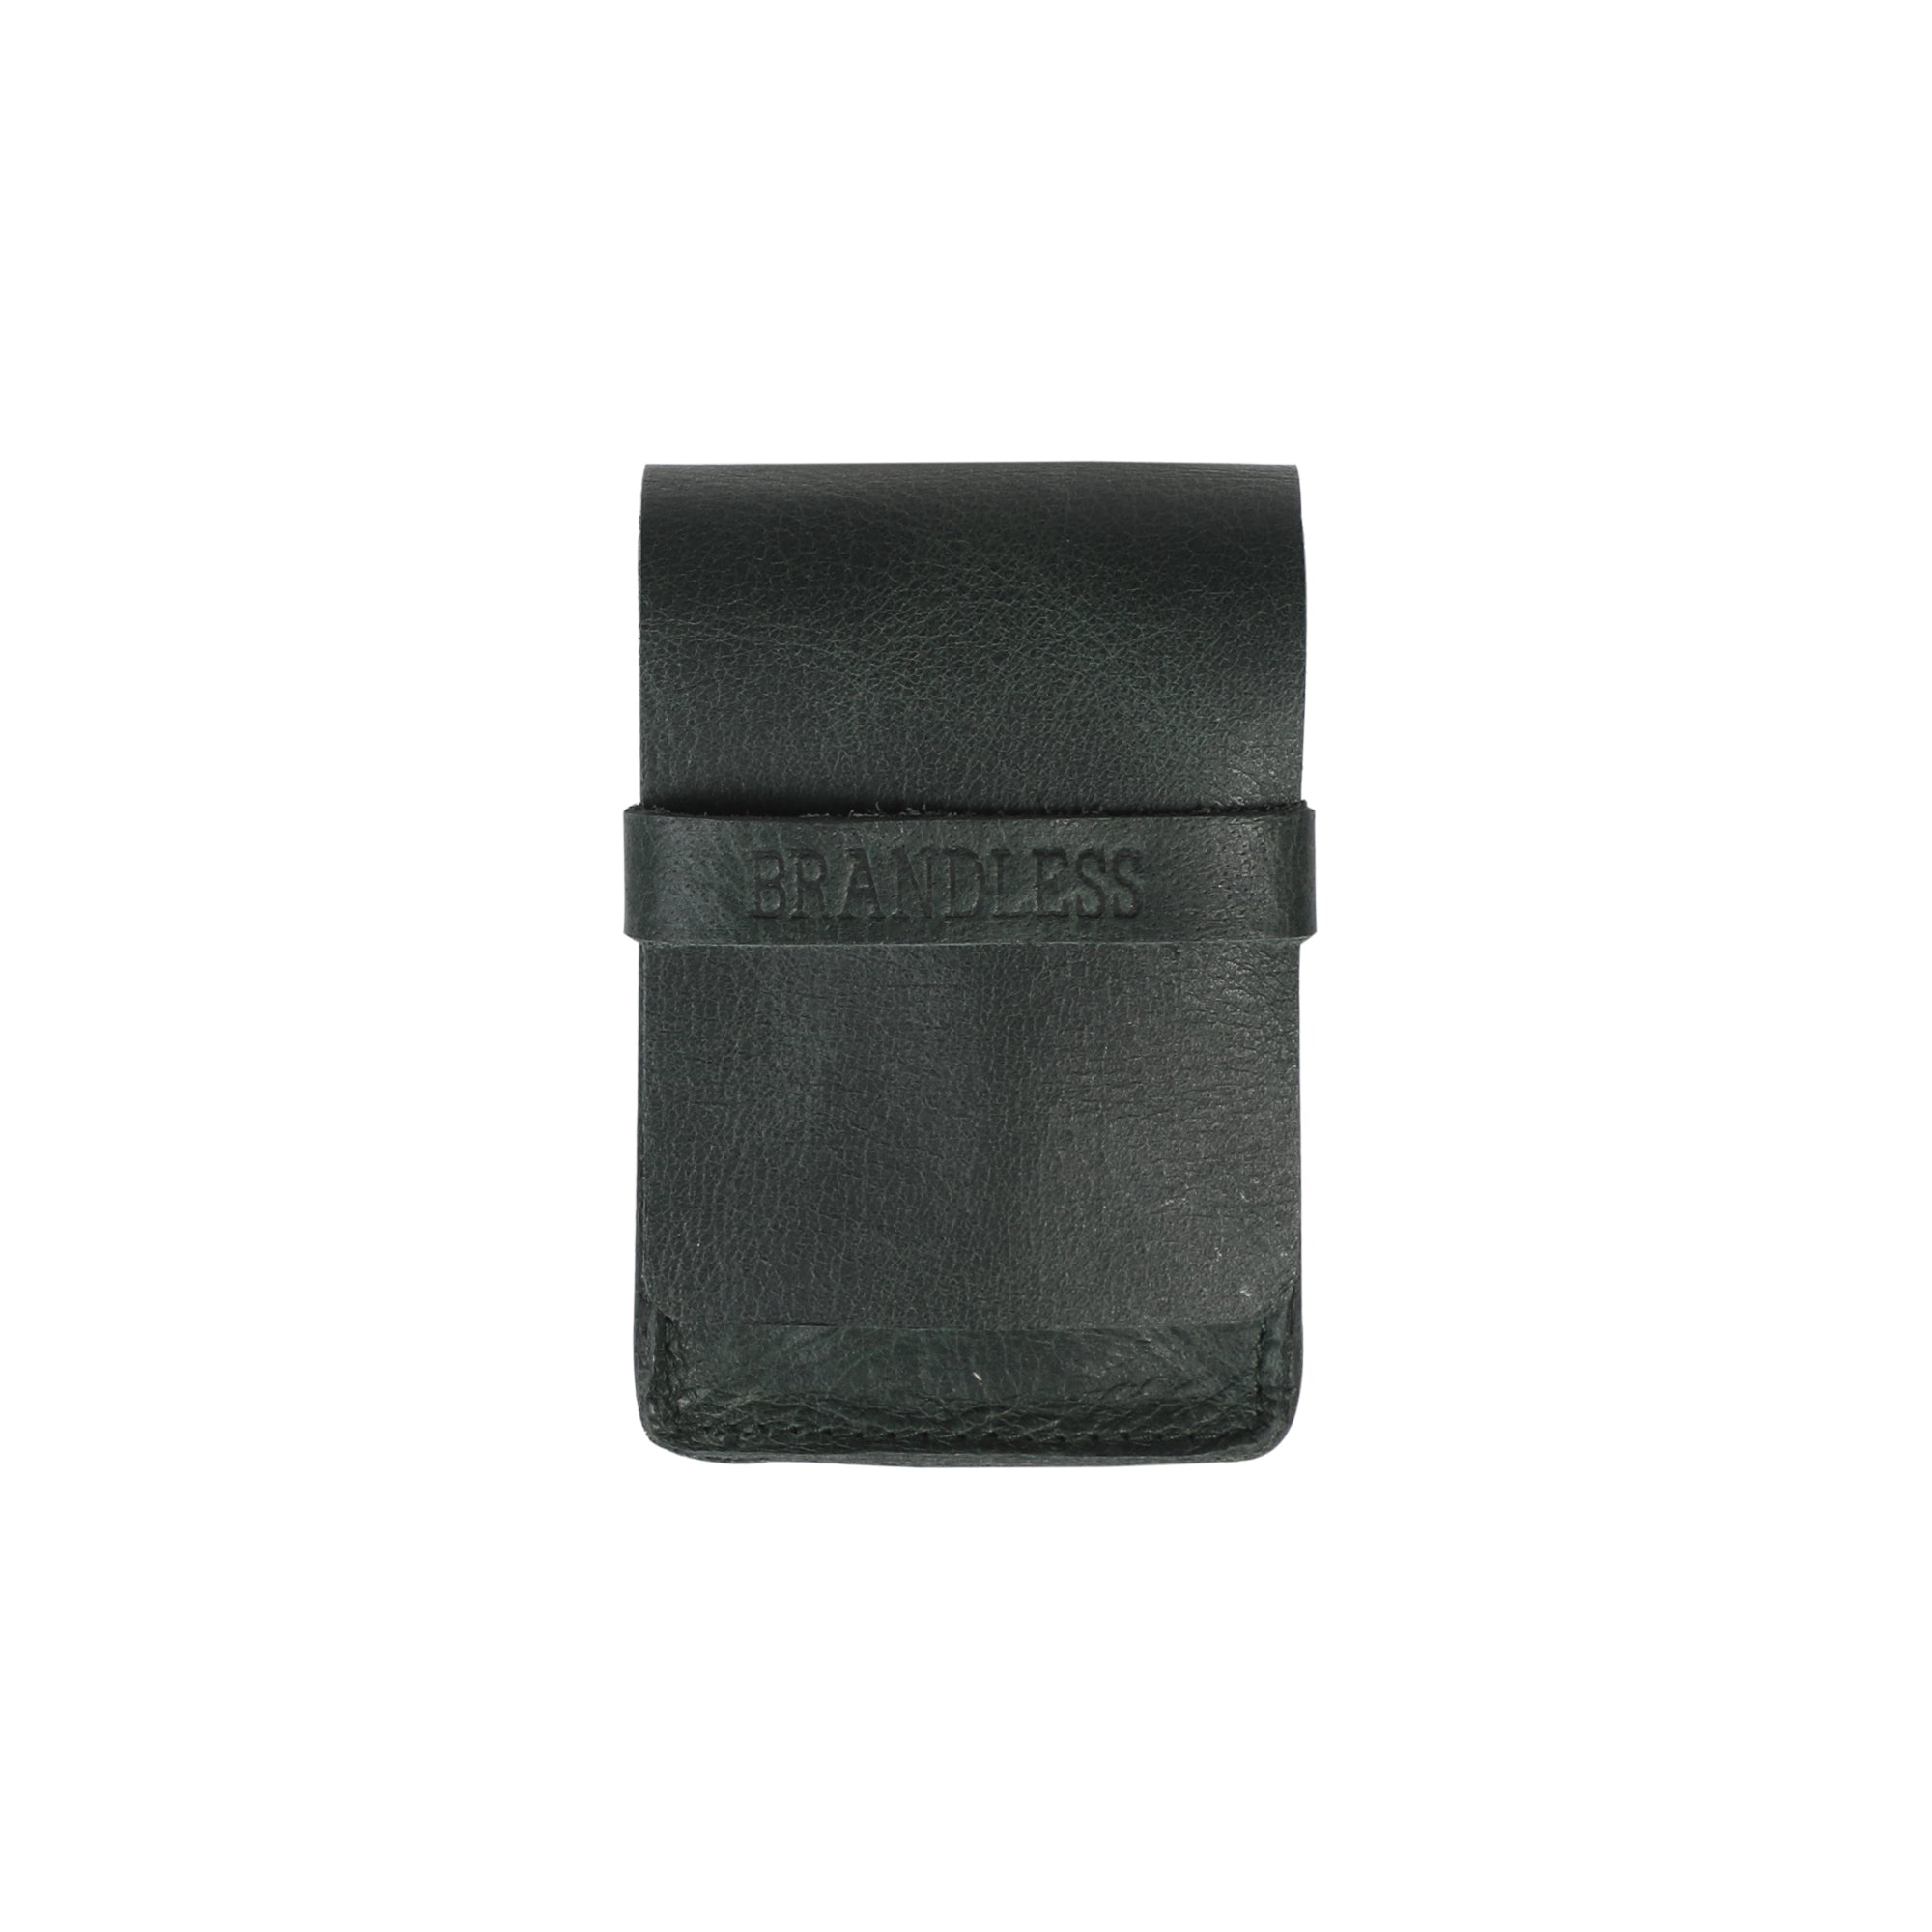 Amazon.com: Women 100% Pure Leather Cigarette Case Lighter Match Pocket  Zipper Coin Pouch -4 Color (Teal) : Health & Household